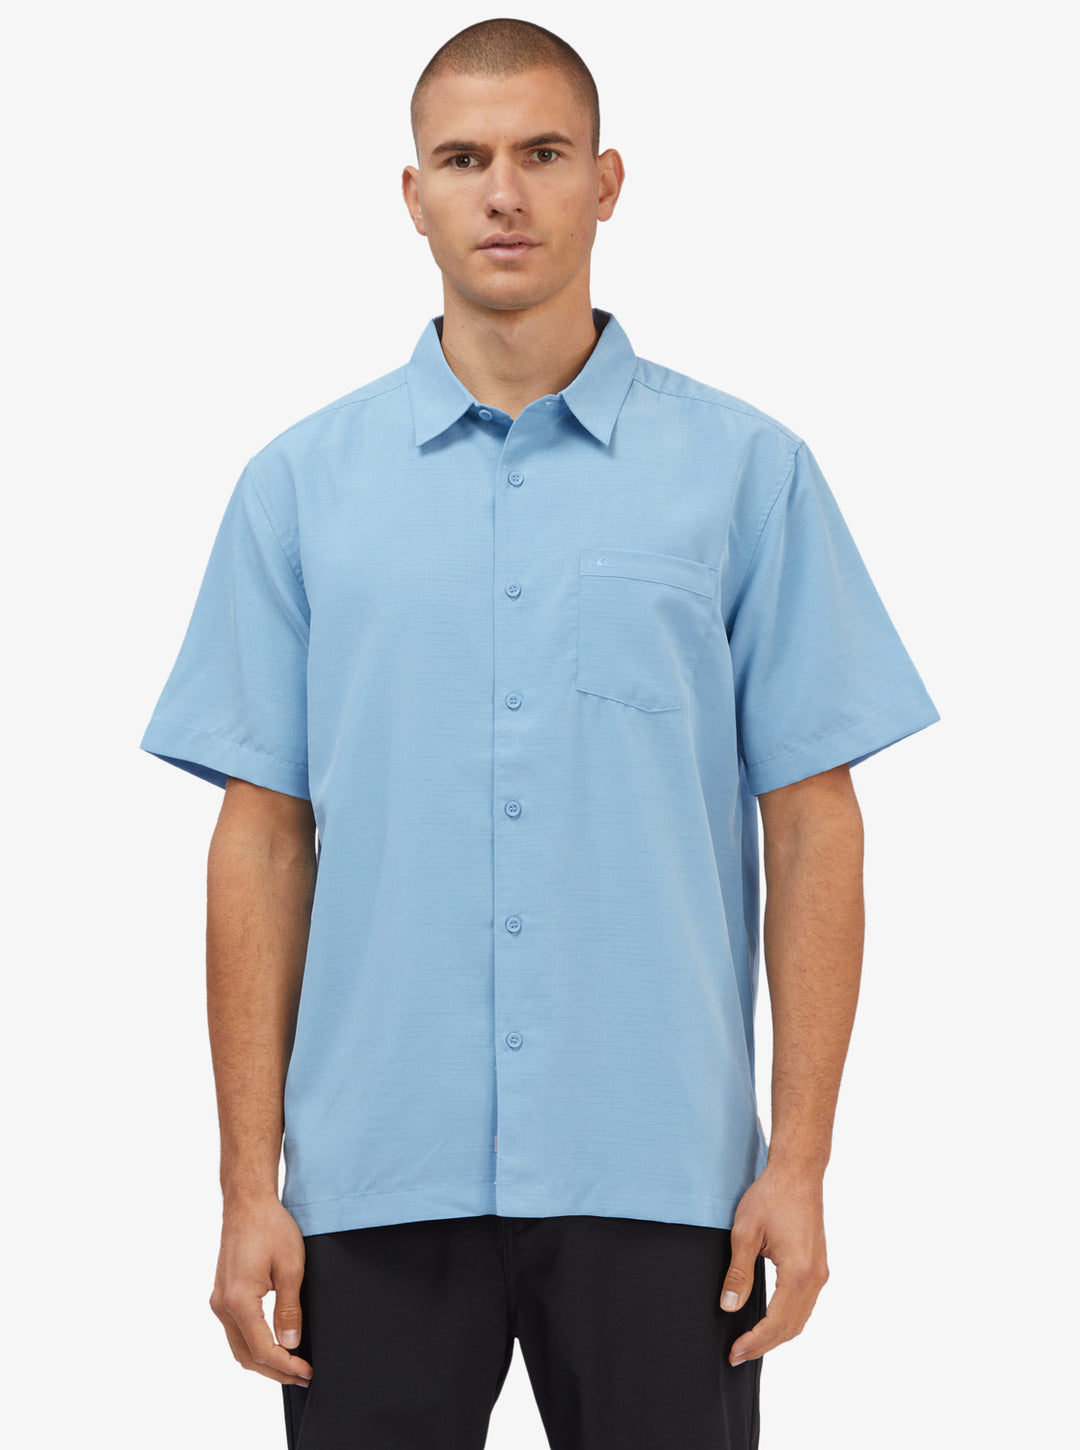 Quiksilver Waterman Centinela Premium Anti-Wrinkle Shirt - Dusk Blue - Sun Diego Boardshop